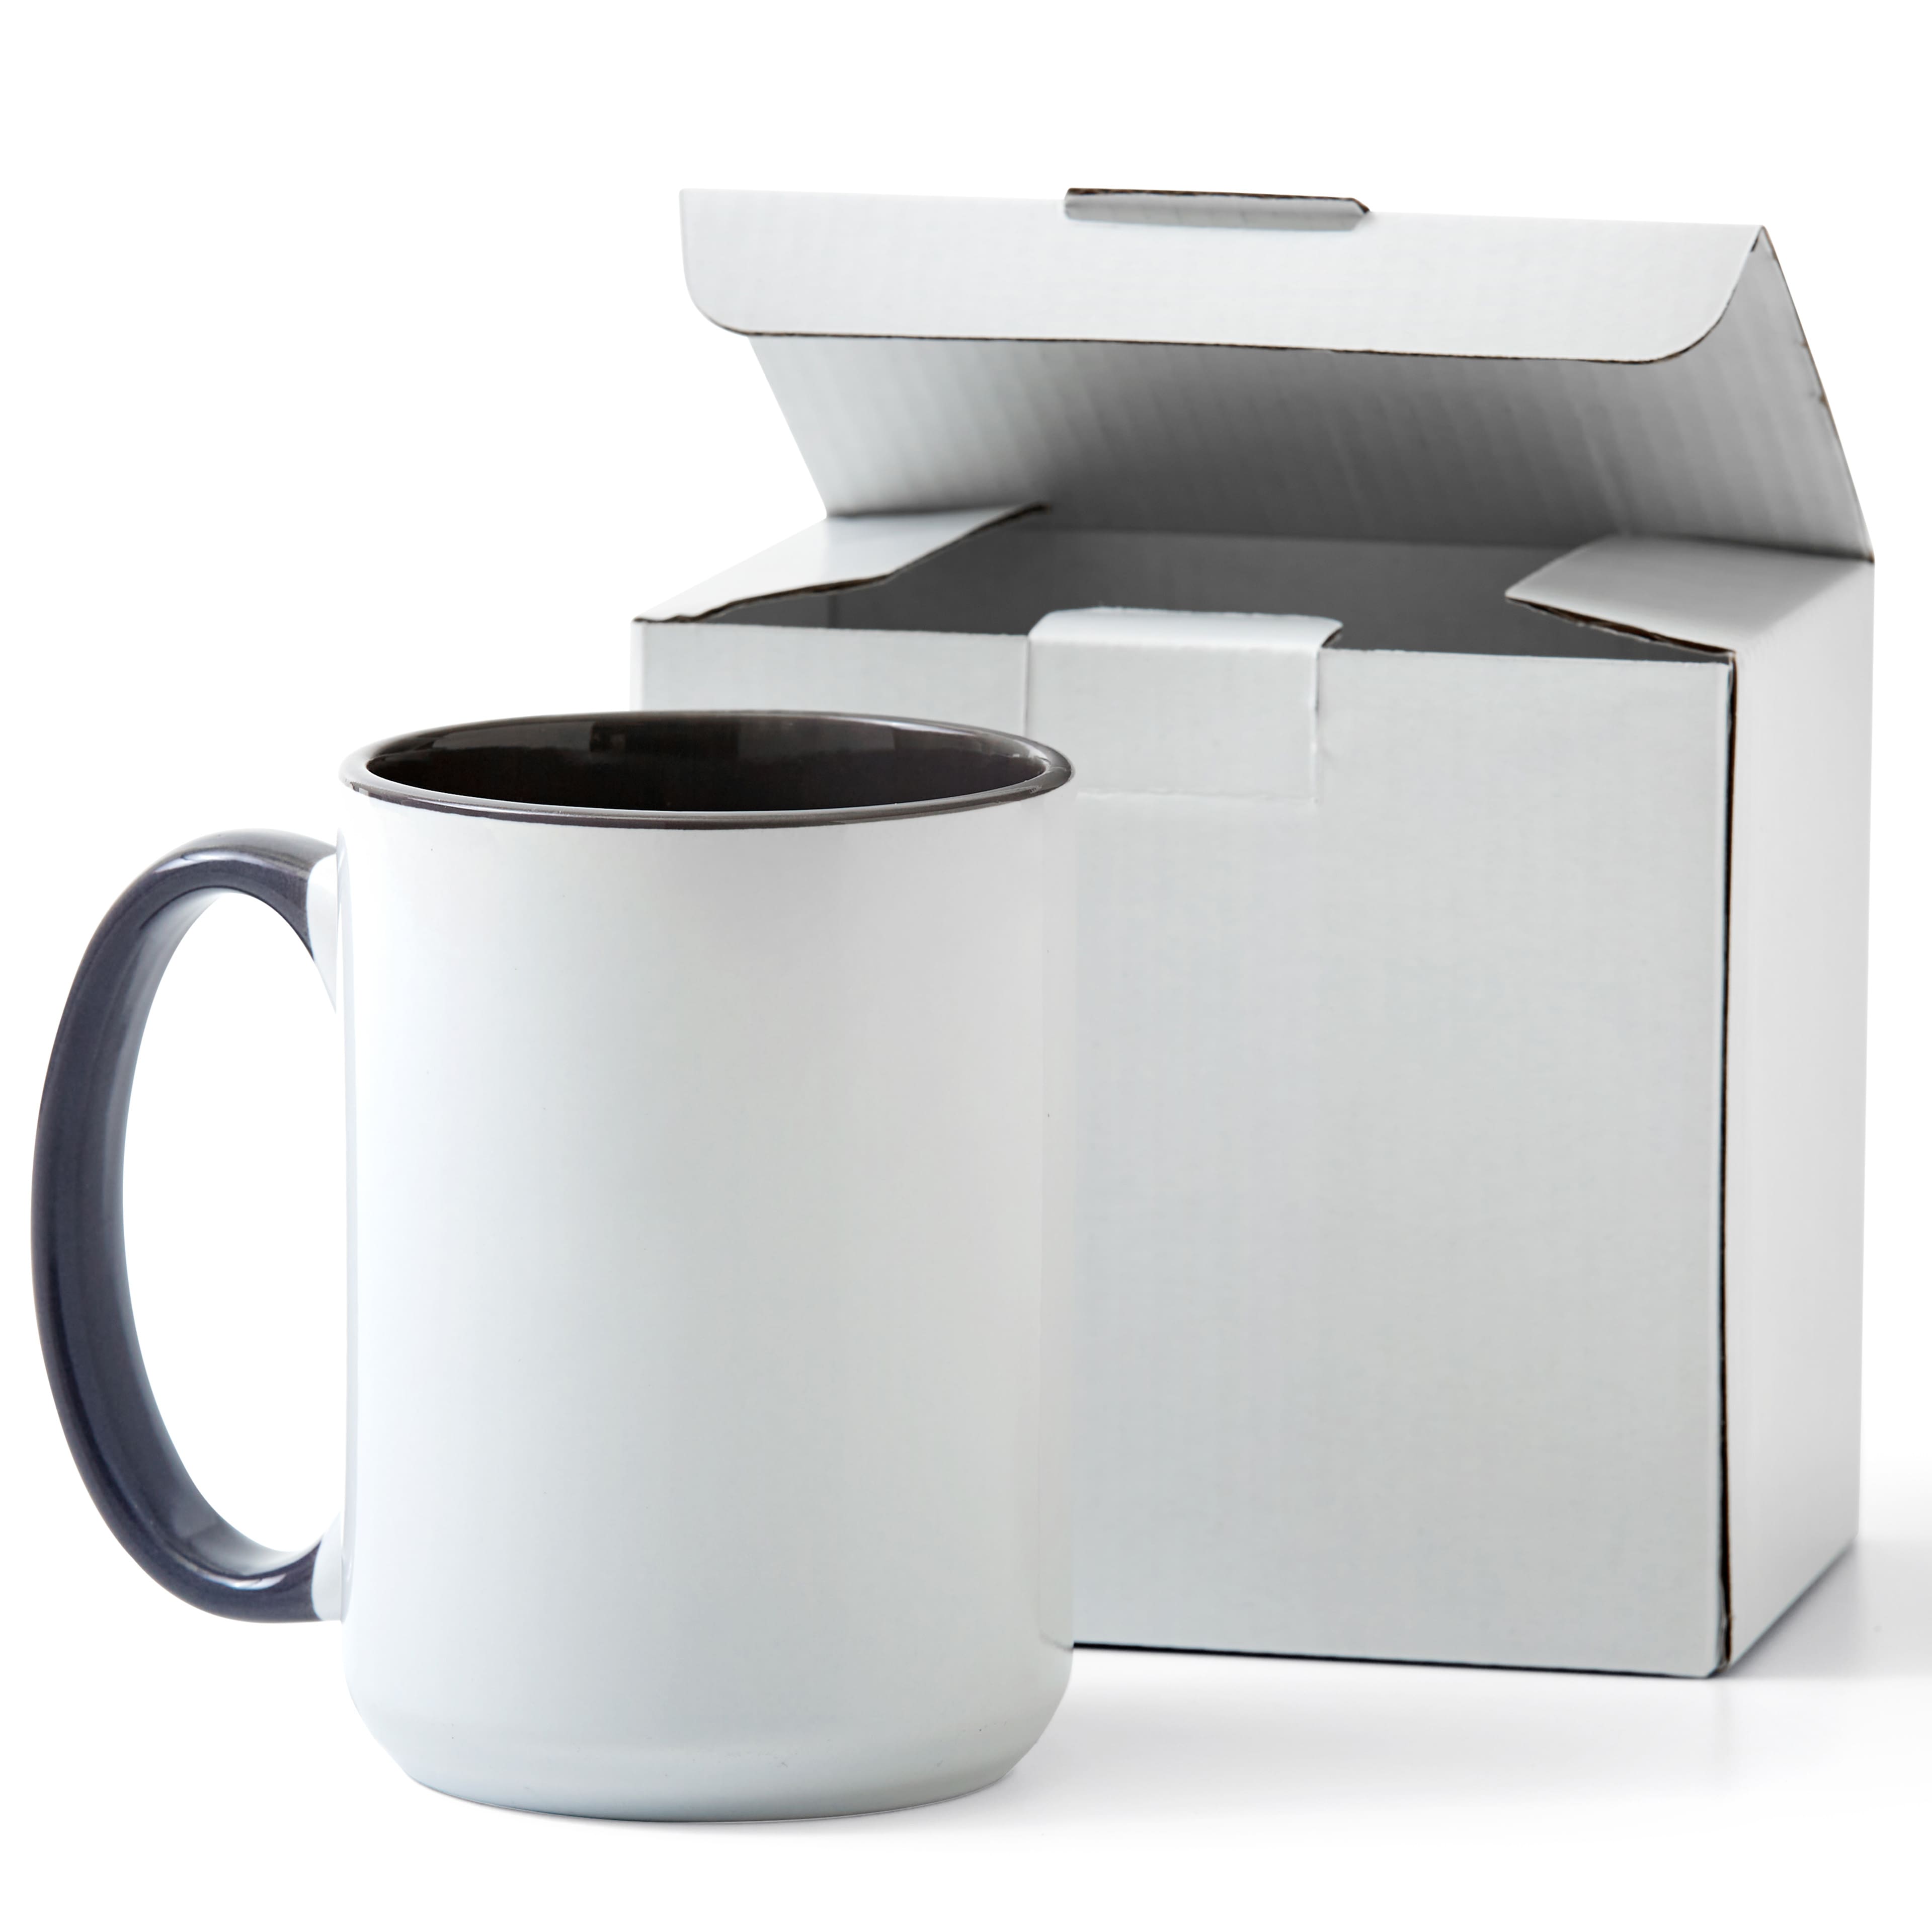 Cricut Ceramic Mug Blank 15 oz/425 ml (6 ct) White 2008944 - Best Buy